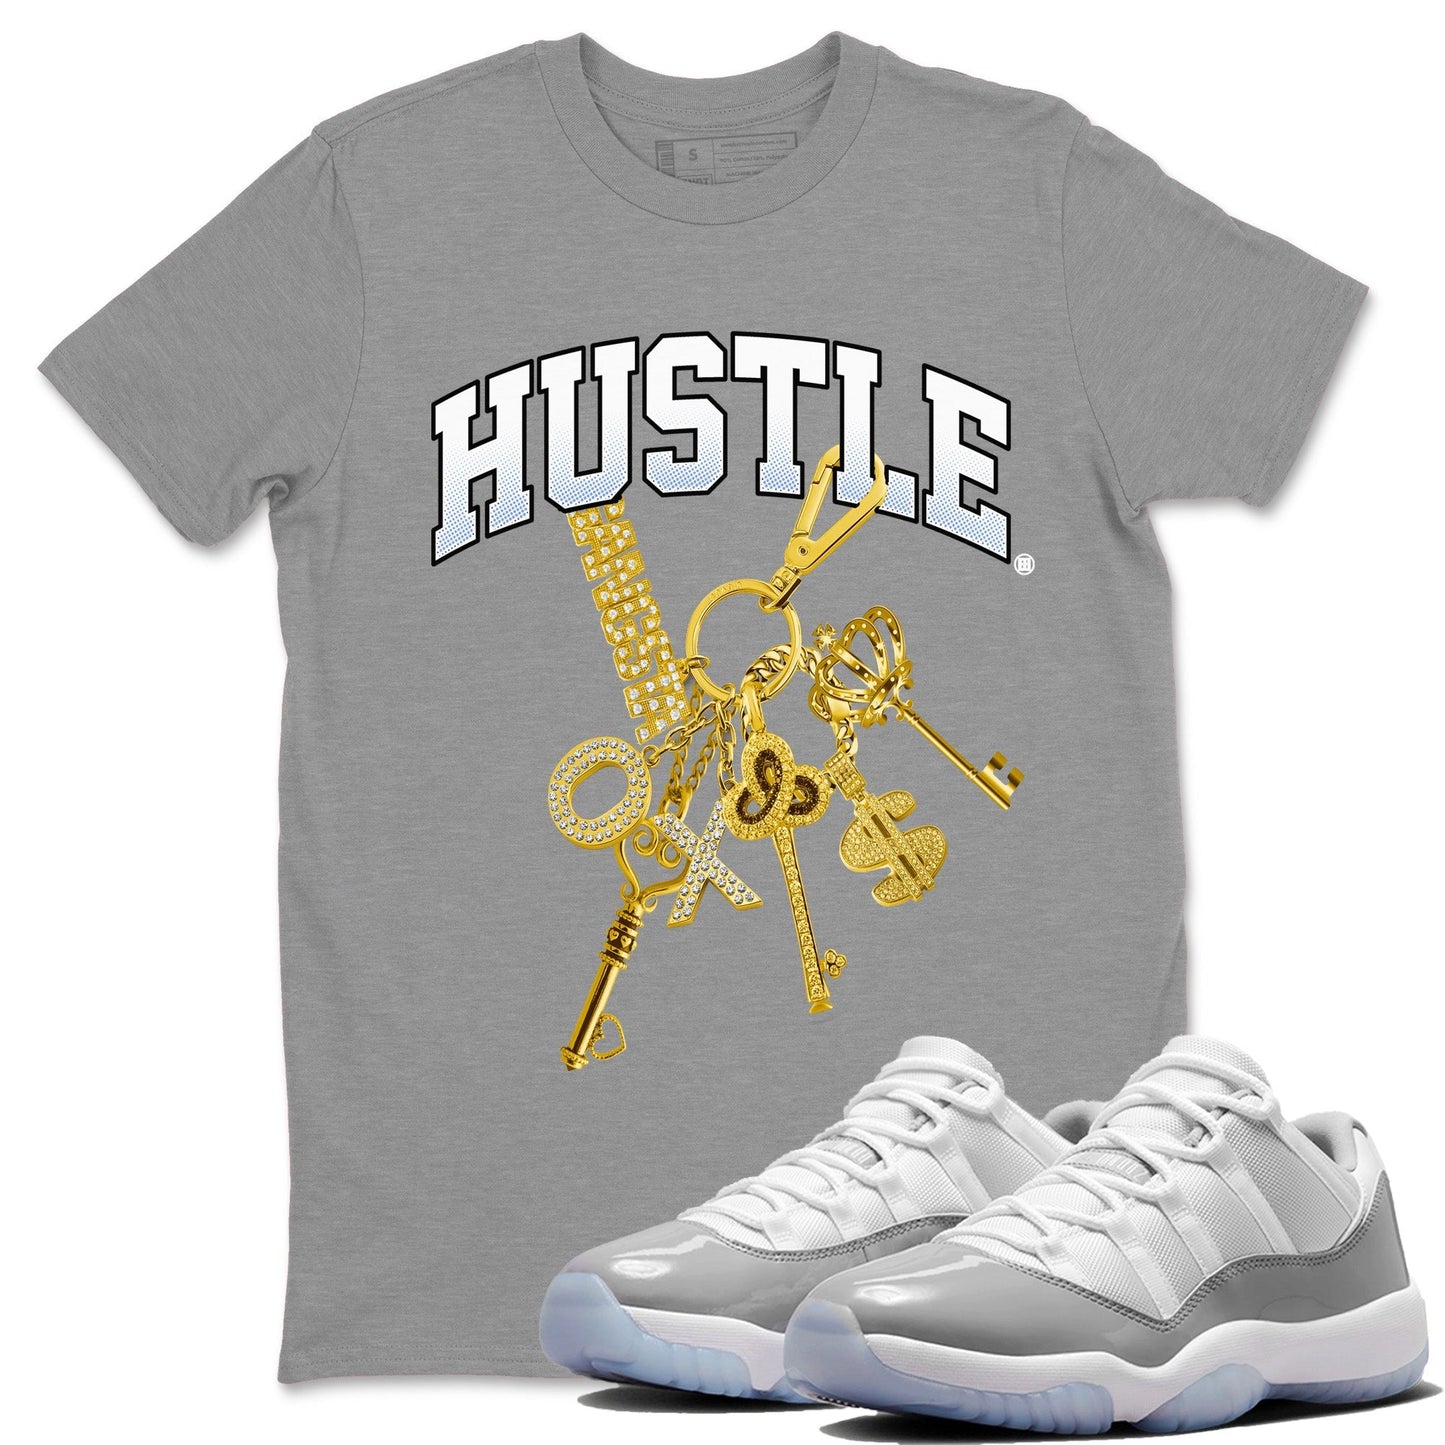 Air Jordan 11 White Cement Gold Hustle Crew Neck Sneaker Tees Air Jordan 11 Cement Grey Sneaker T-Shirts Size Chart